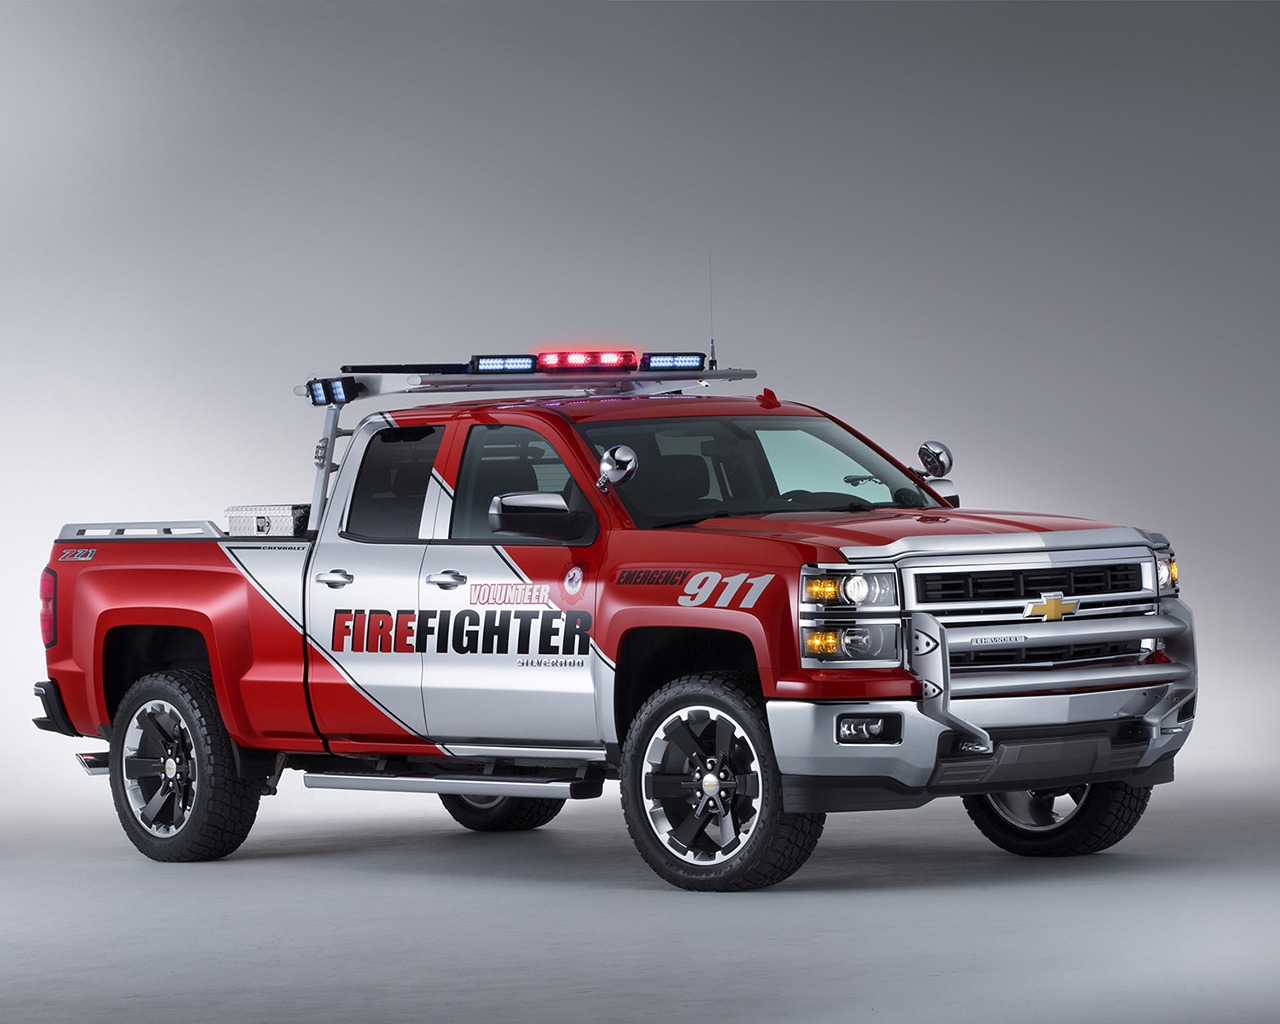 Chevrolet Silverado Volunteer Firefighters Concept for 1280 x 1024 resolution